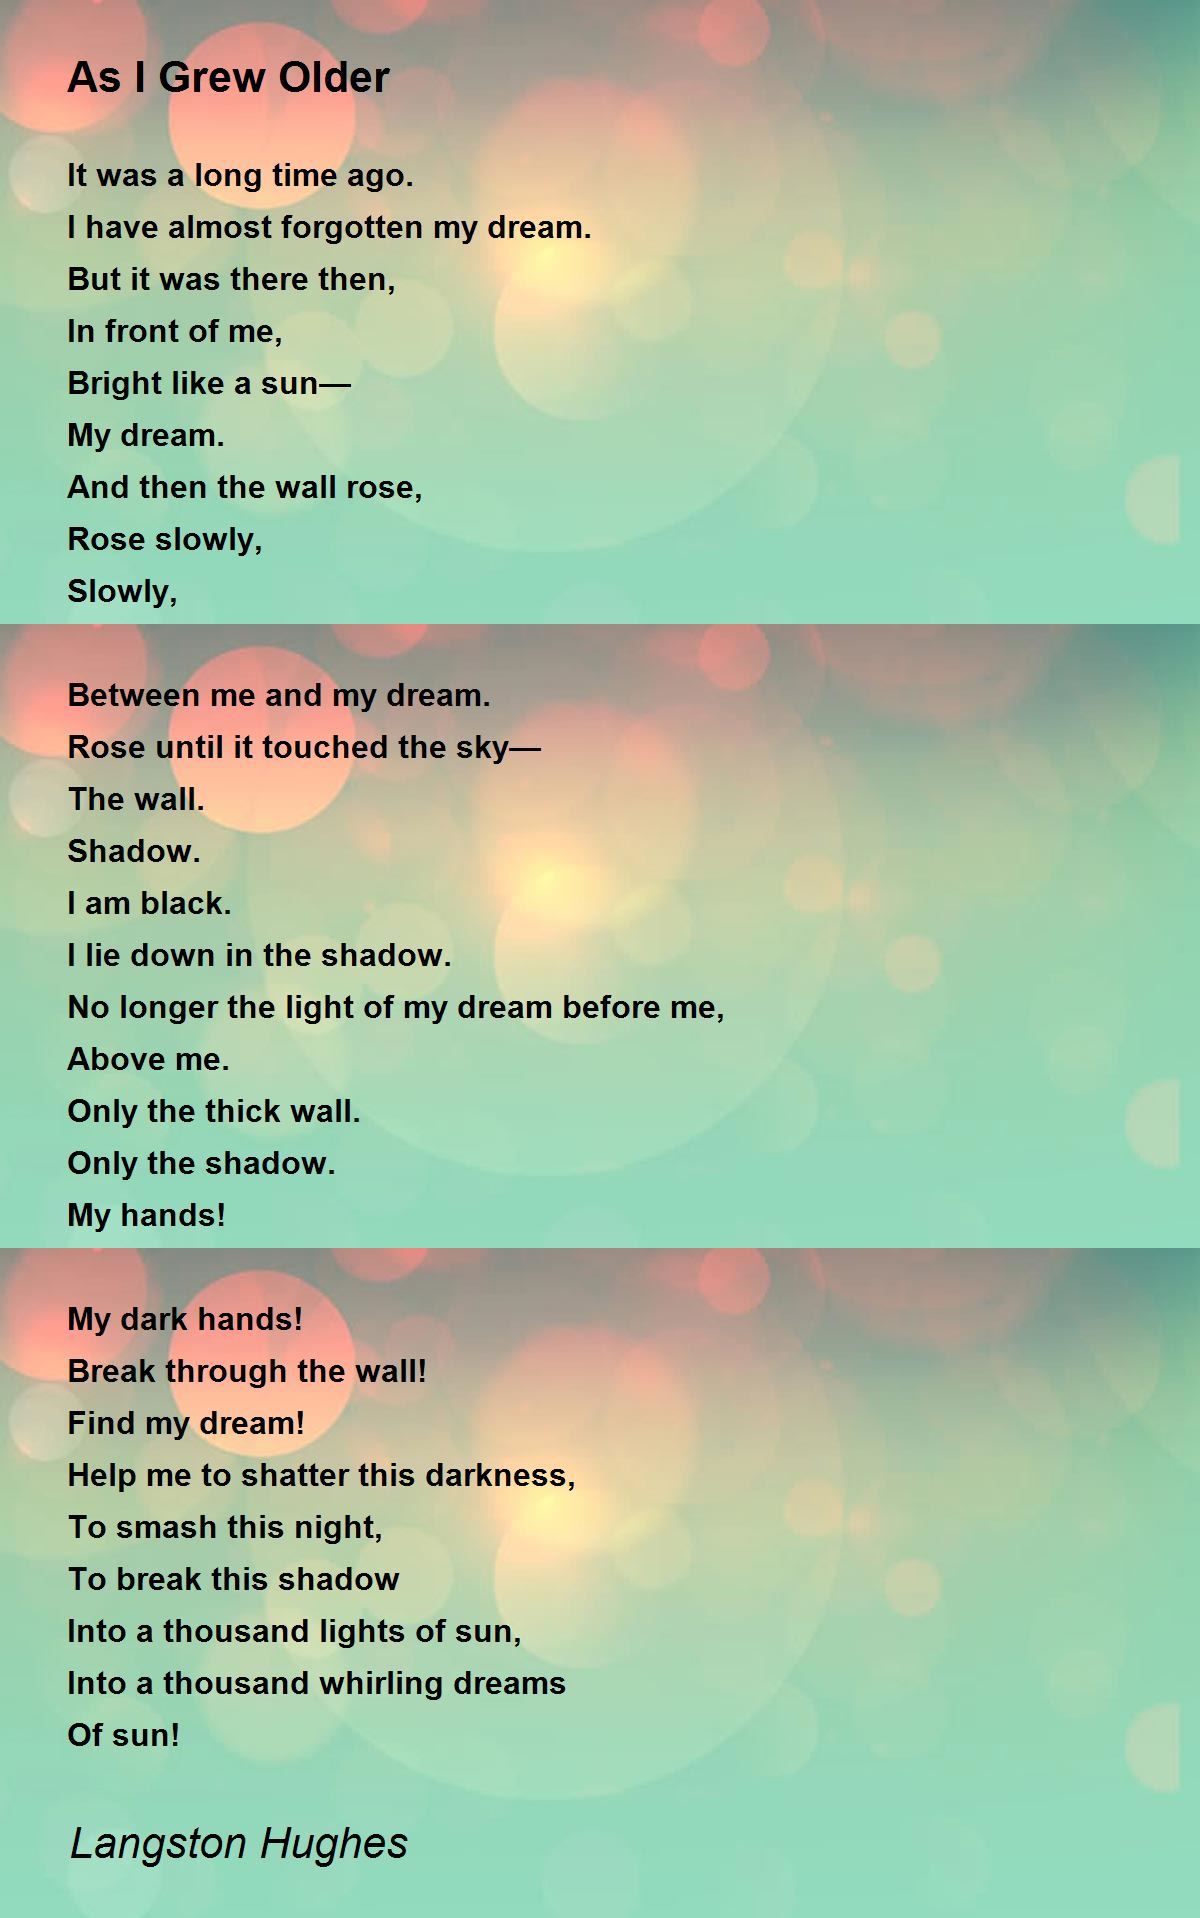 As I Grew Older Poem by Langston Hughes - Poem Hunter